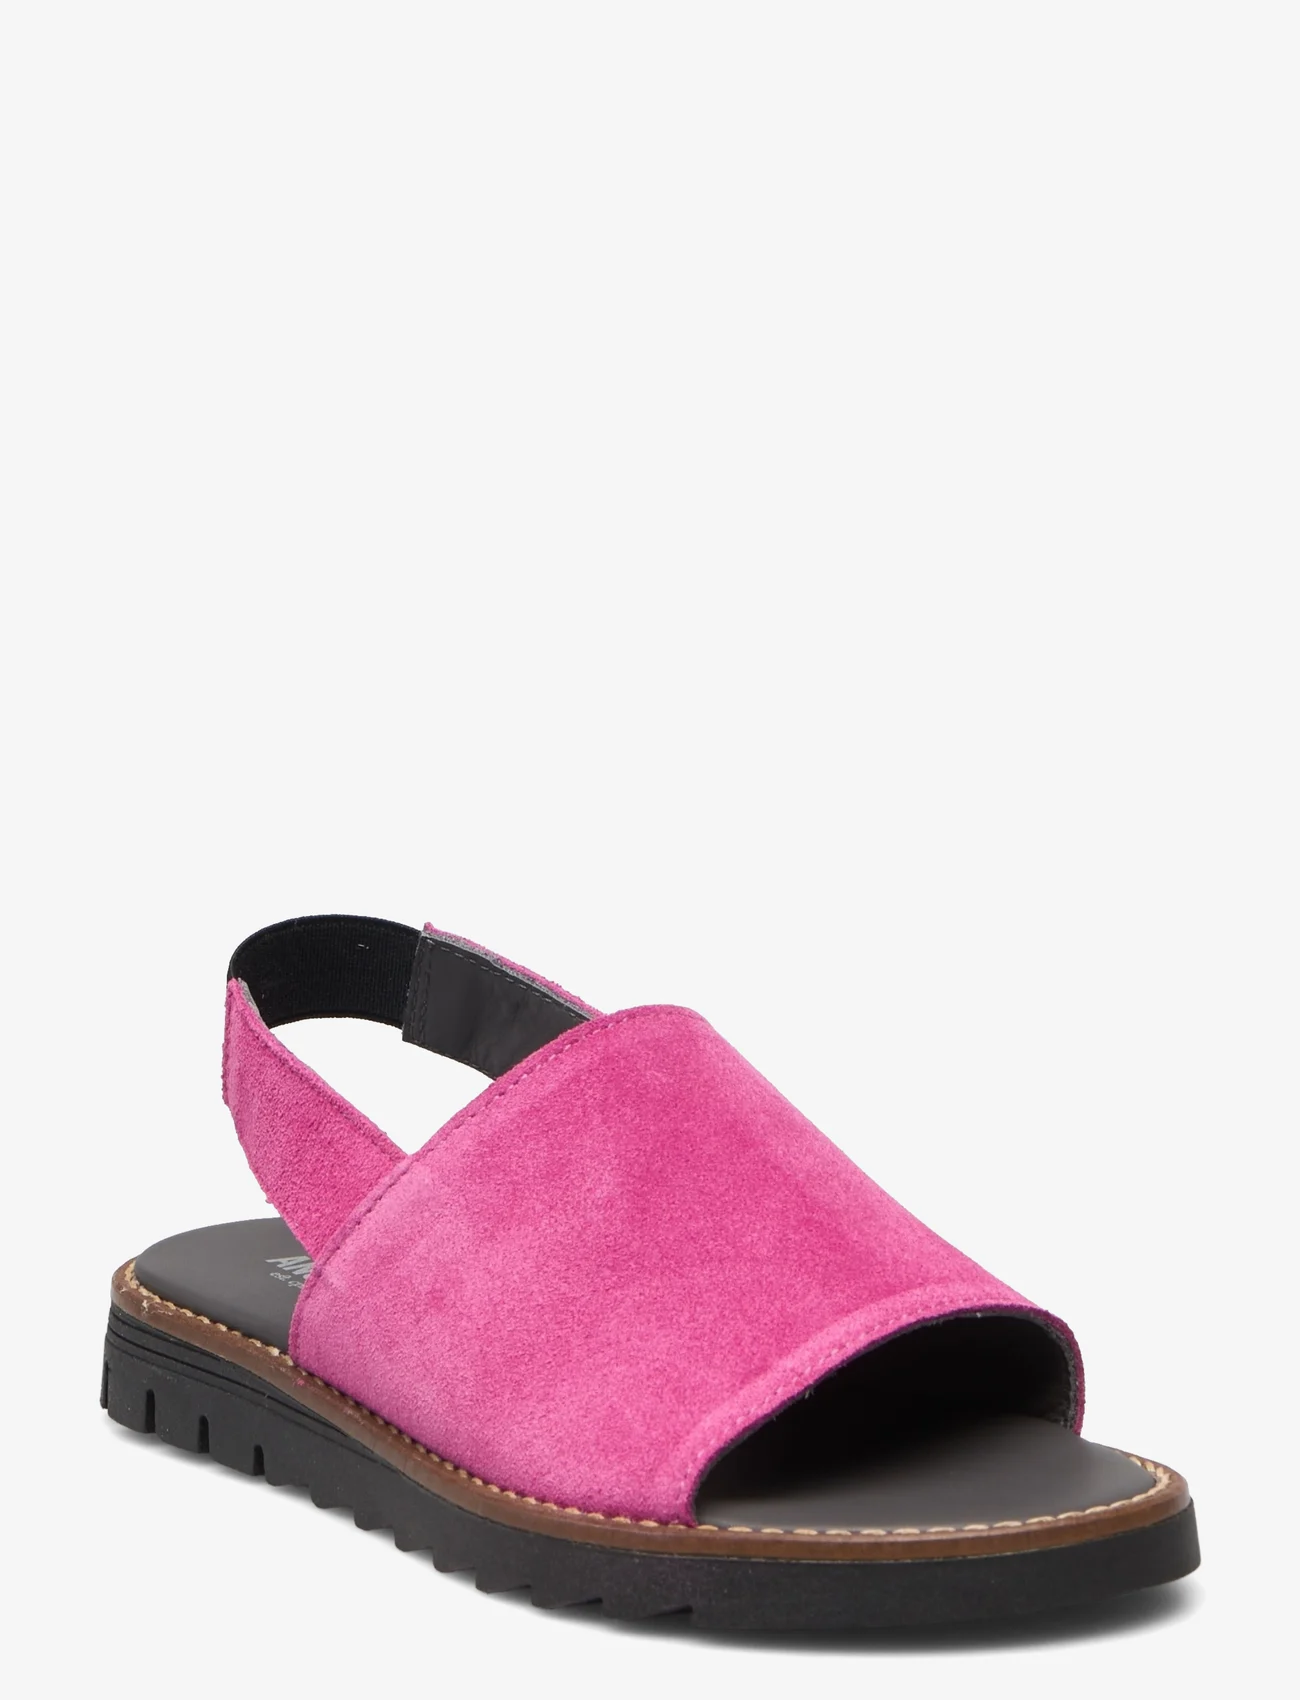 ANGULUS - Sandals - flat - open toe - op - sommarfynd - 1150 pink - 0